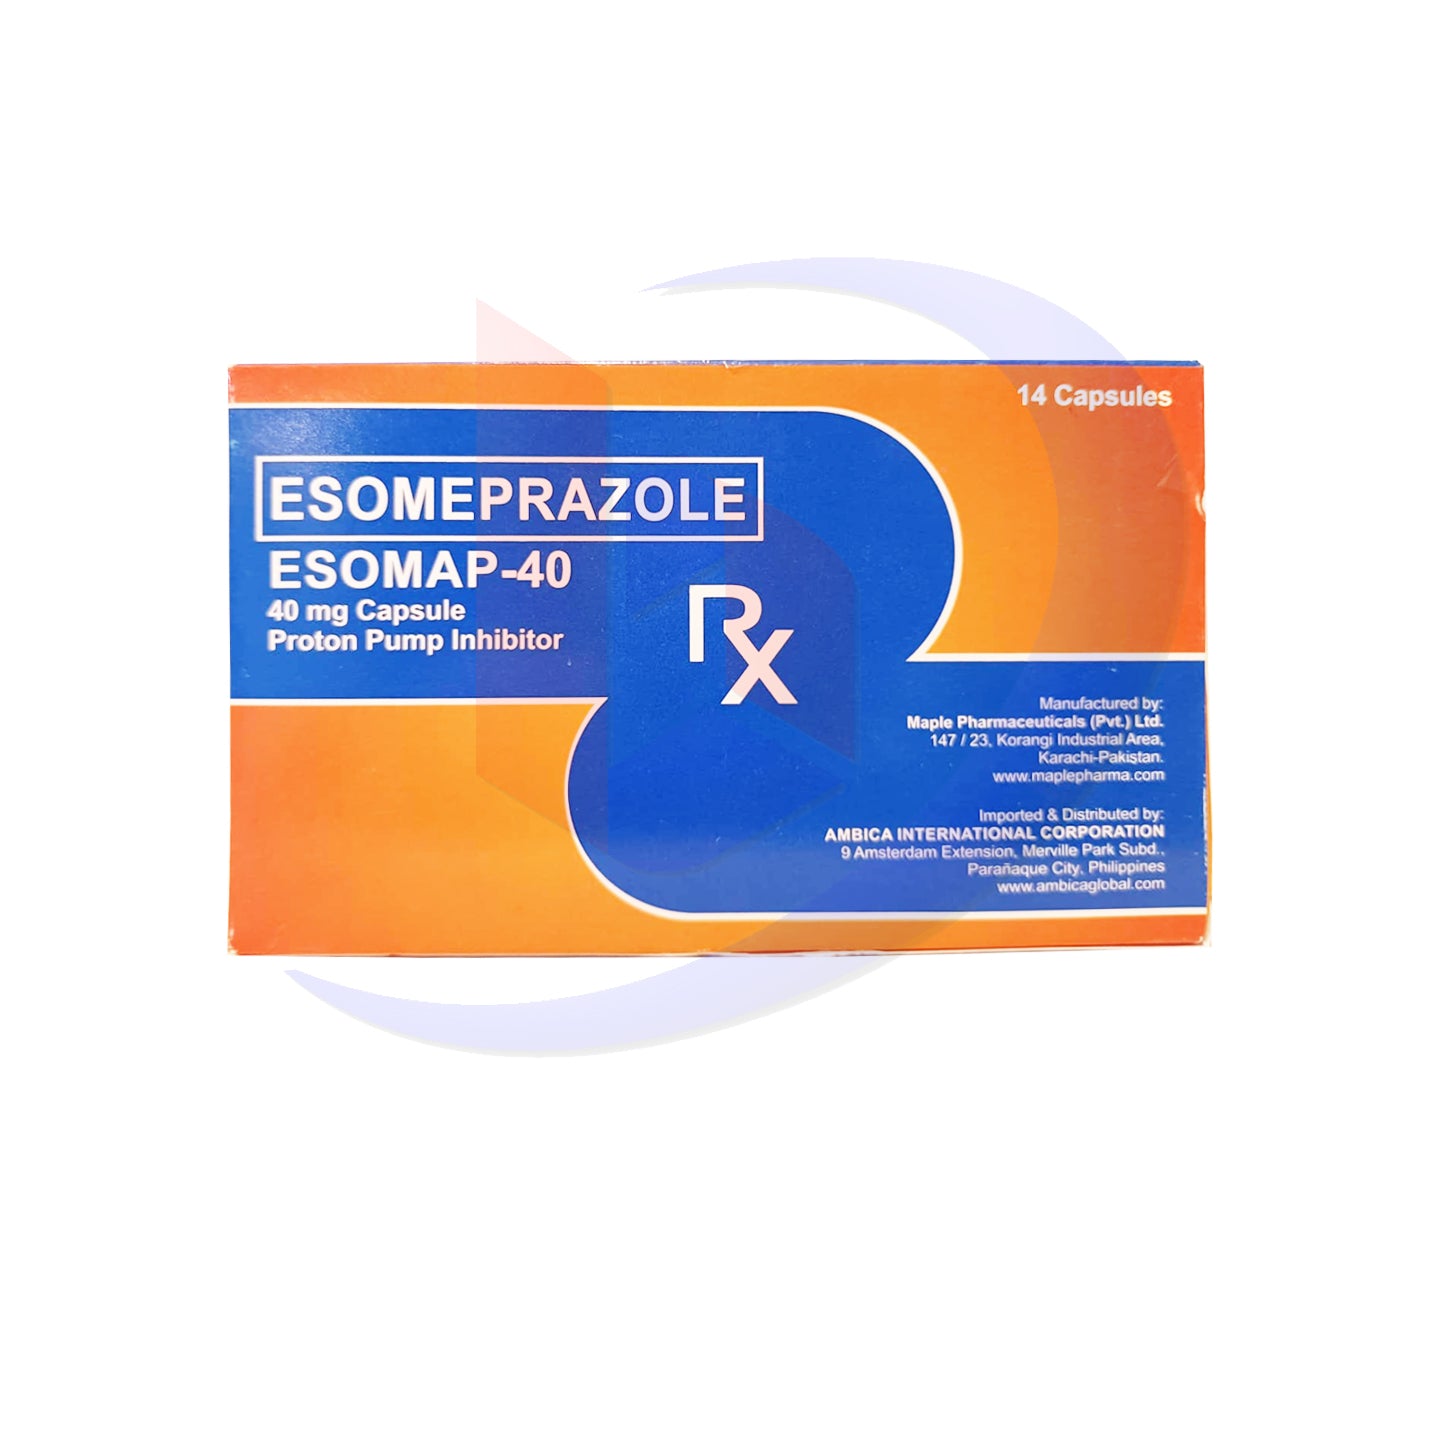 Esomeprazole (Esomap 40) 40mg Capsule 14's